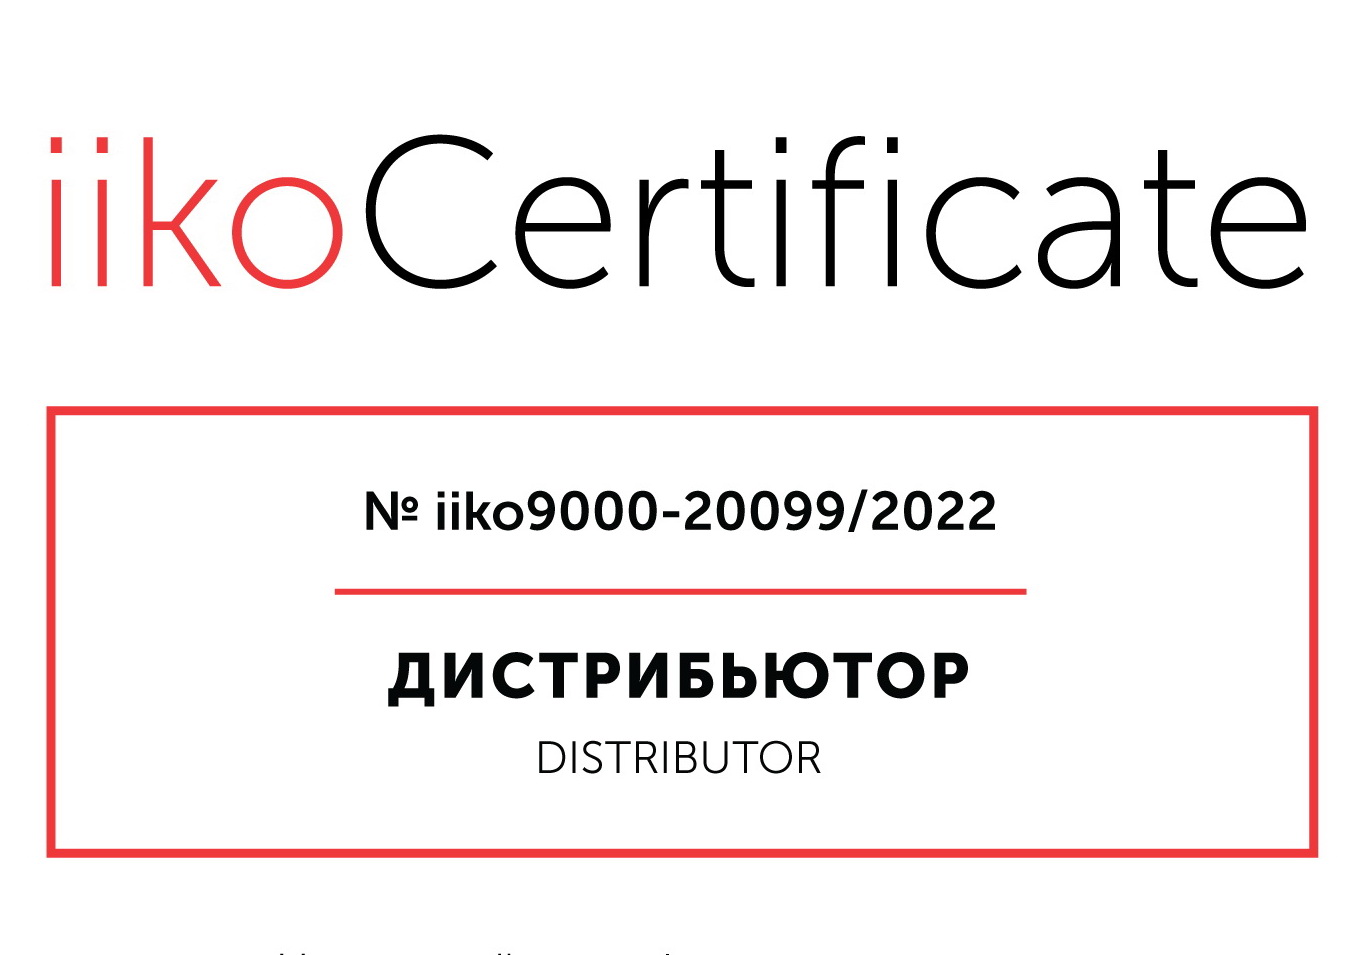 Сервис ККС сертифицирован по стандарту iiko9000.Сервис